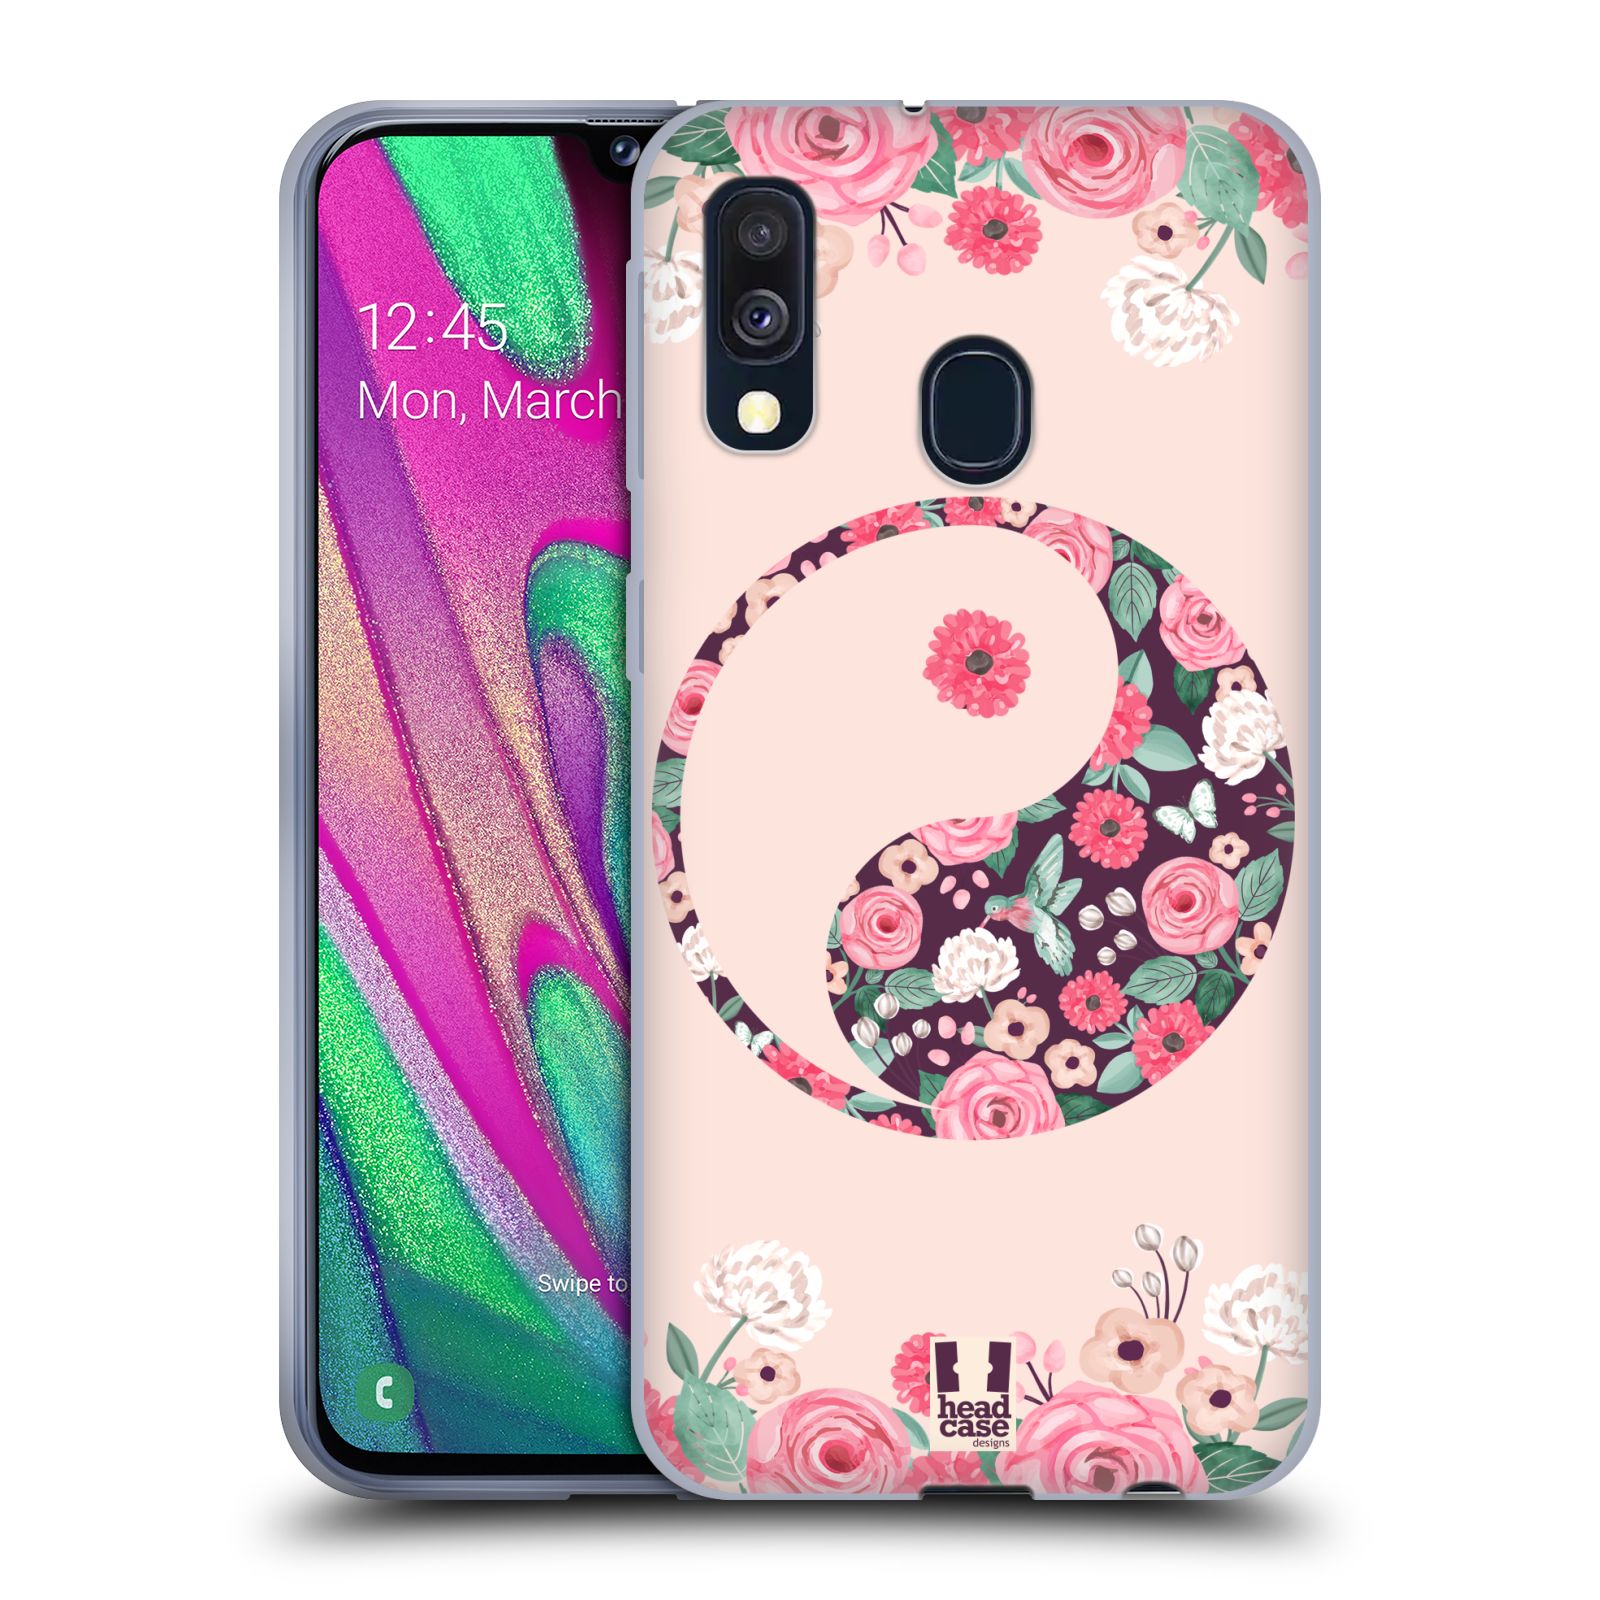 Silikonové pouzdro na mobil Samsung Galaxy A40 - Head Case - Yin a Yang Floral (Silikonový kryt, obal, pouzdro na mobilní telefon Samsung Galaxy A40 A405F Dual SIM s motivem Yin a Yang Floral)